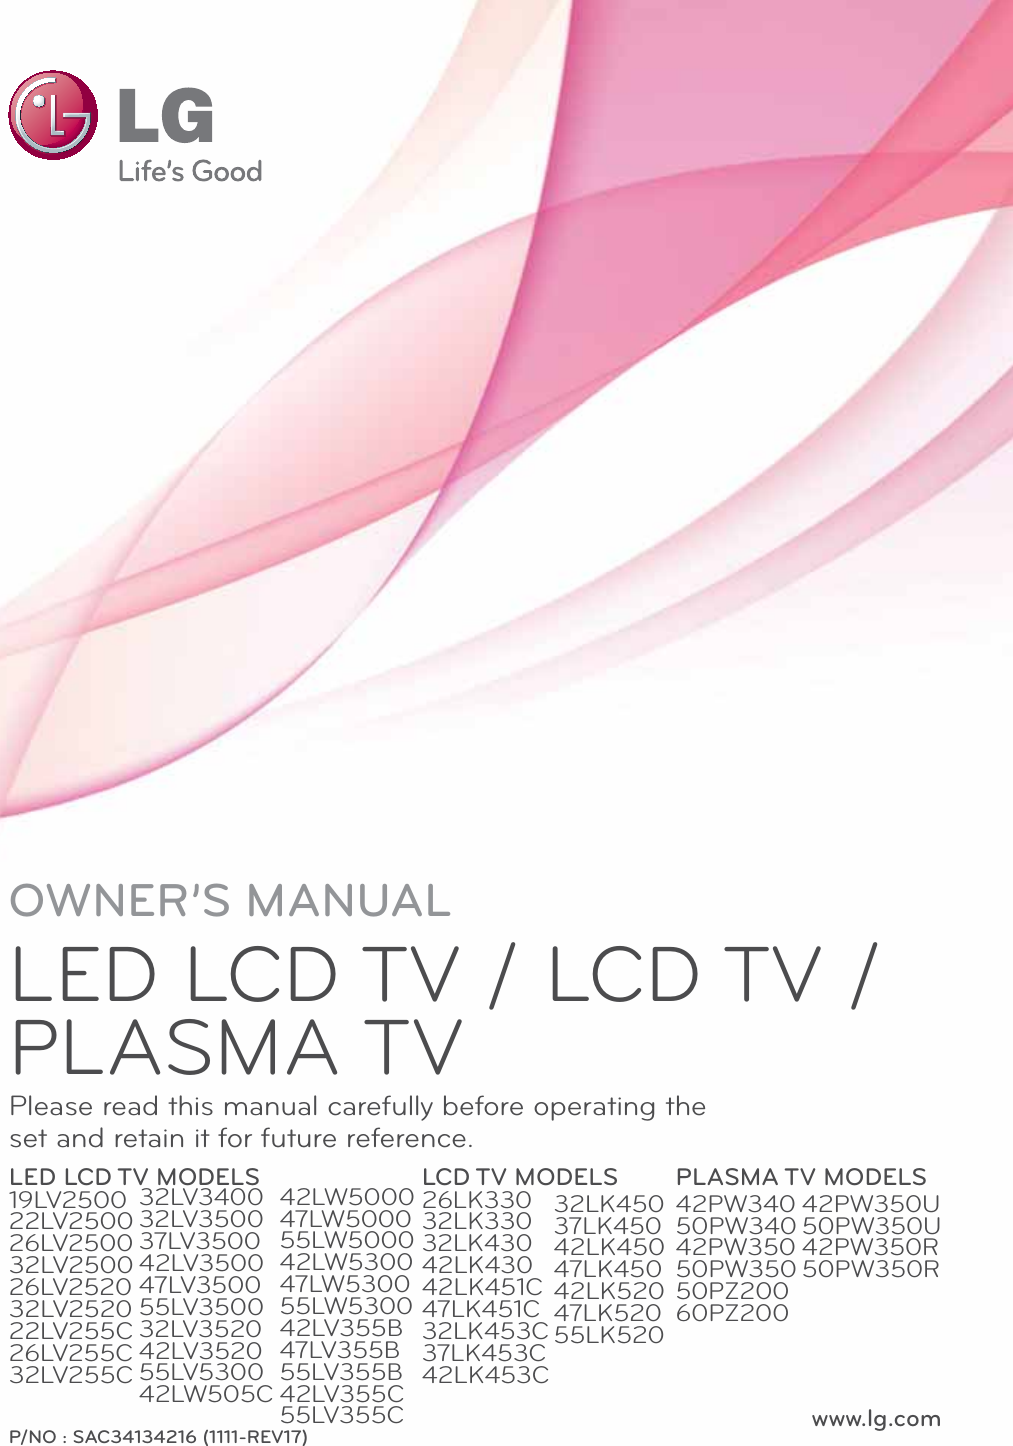 www.lg.comP/NO : SAC34134216 (1111-REV17)OWNER’S MANUALLED LCD TV / LCD TV / PLASMA TVPlease read this manual carefully before operating the set and retain it for future reference.LED LCD TV MODELS19LV250022LV250026LV250032LV250026LV252032LV252022LV255C26LV255C32LV255CLCD TV MODELS26LK33032LK33032LK43042LK43042LK451C47LK451C32LK453C37LK453C42LK453CPLASMA TV MODELS42PW34050PW34042PW35050PW35050PZ20060PZ20032LV340032LV350037LV350042LV350047LV350055LV350032LV352042LV352055LV530042LW505C32LK45037LK45042LK45047LK45042LK52047LK52055LK52042PW350U50PW350U42PW350R50PW350R42LW500047LW500055LW500042LW530047LW530055LW530042LV355B47LV355B55LV355B42LV355C55LV355C